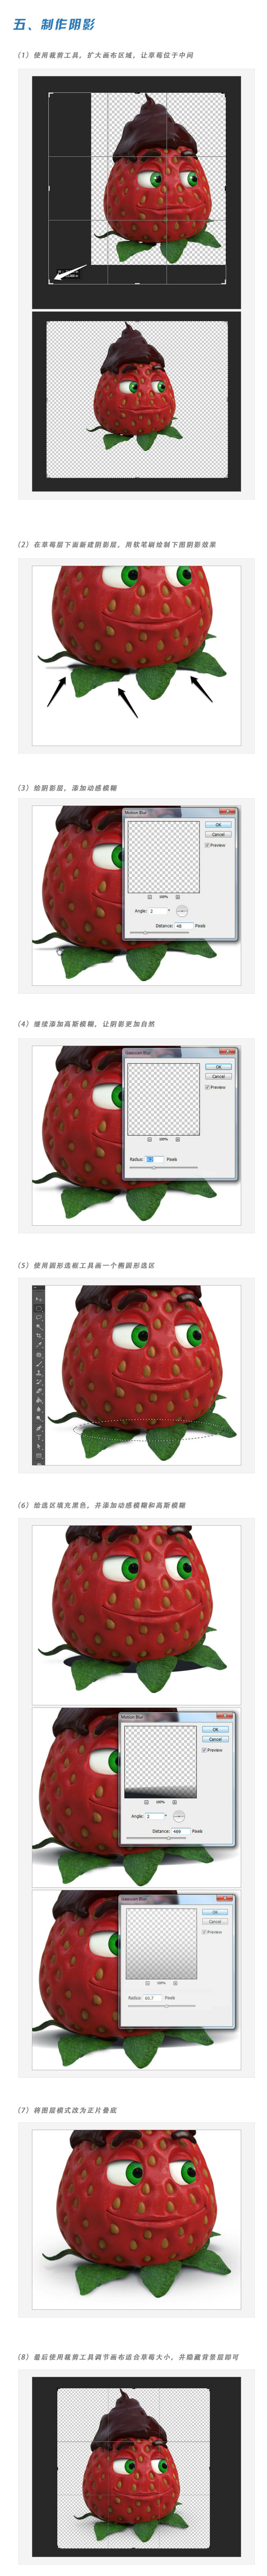 PhotoShop另类创意草莓甜点3D平面广告设计制作教程5